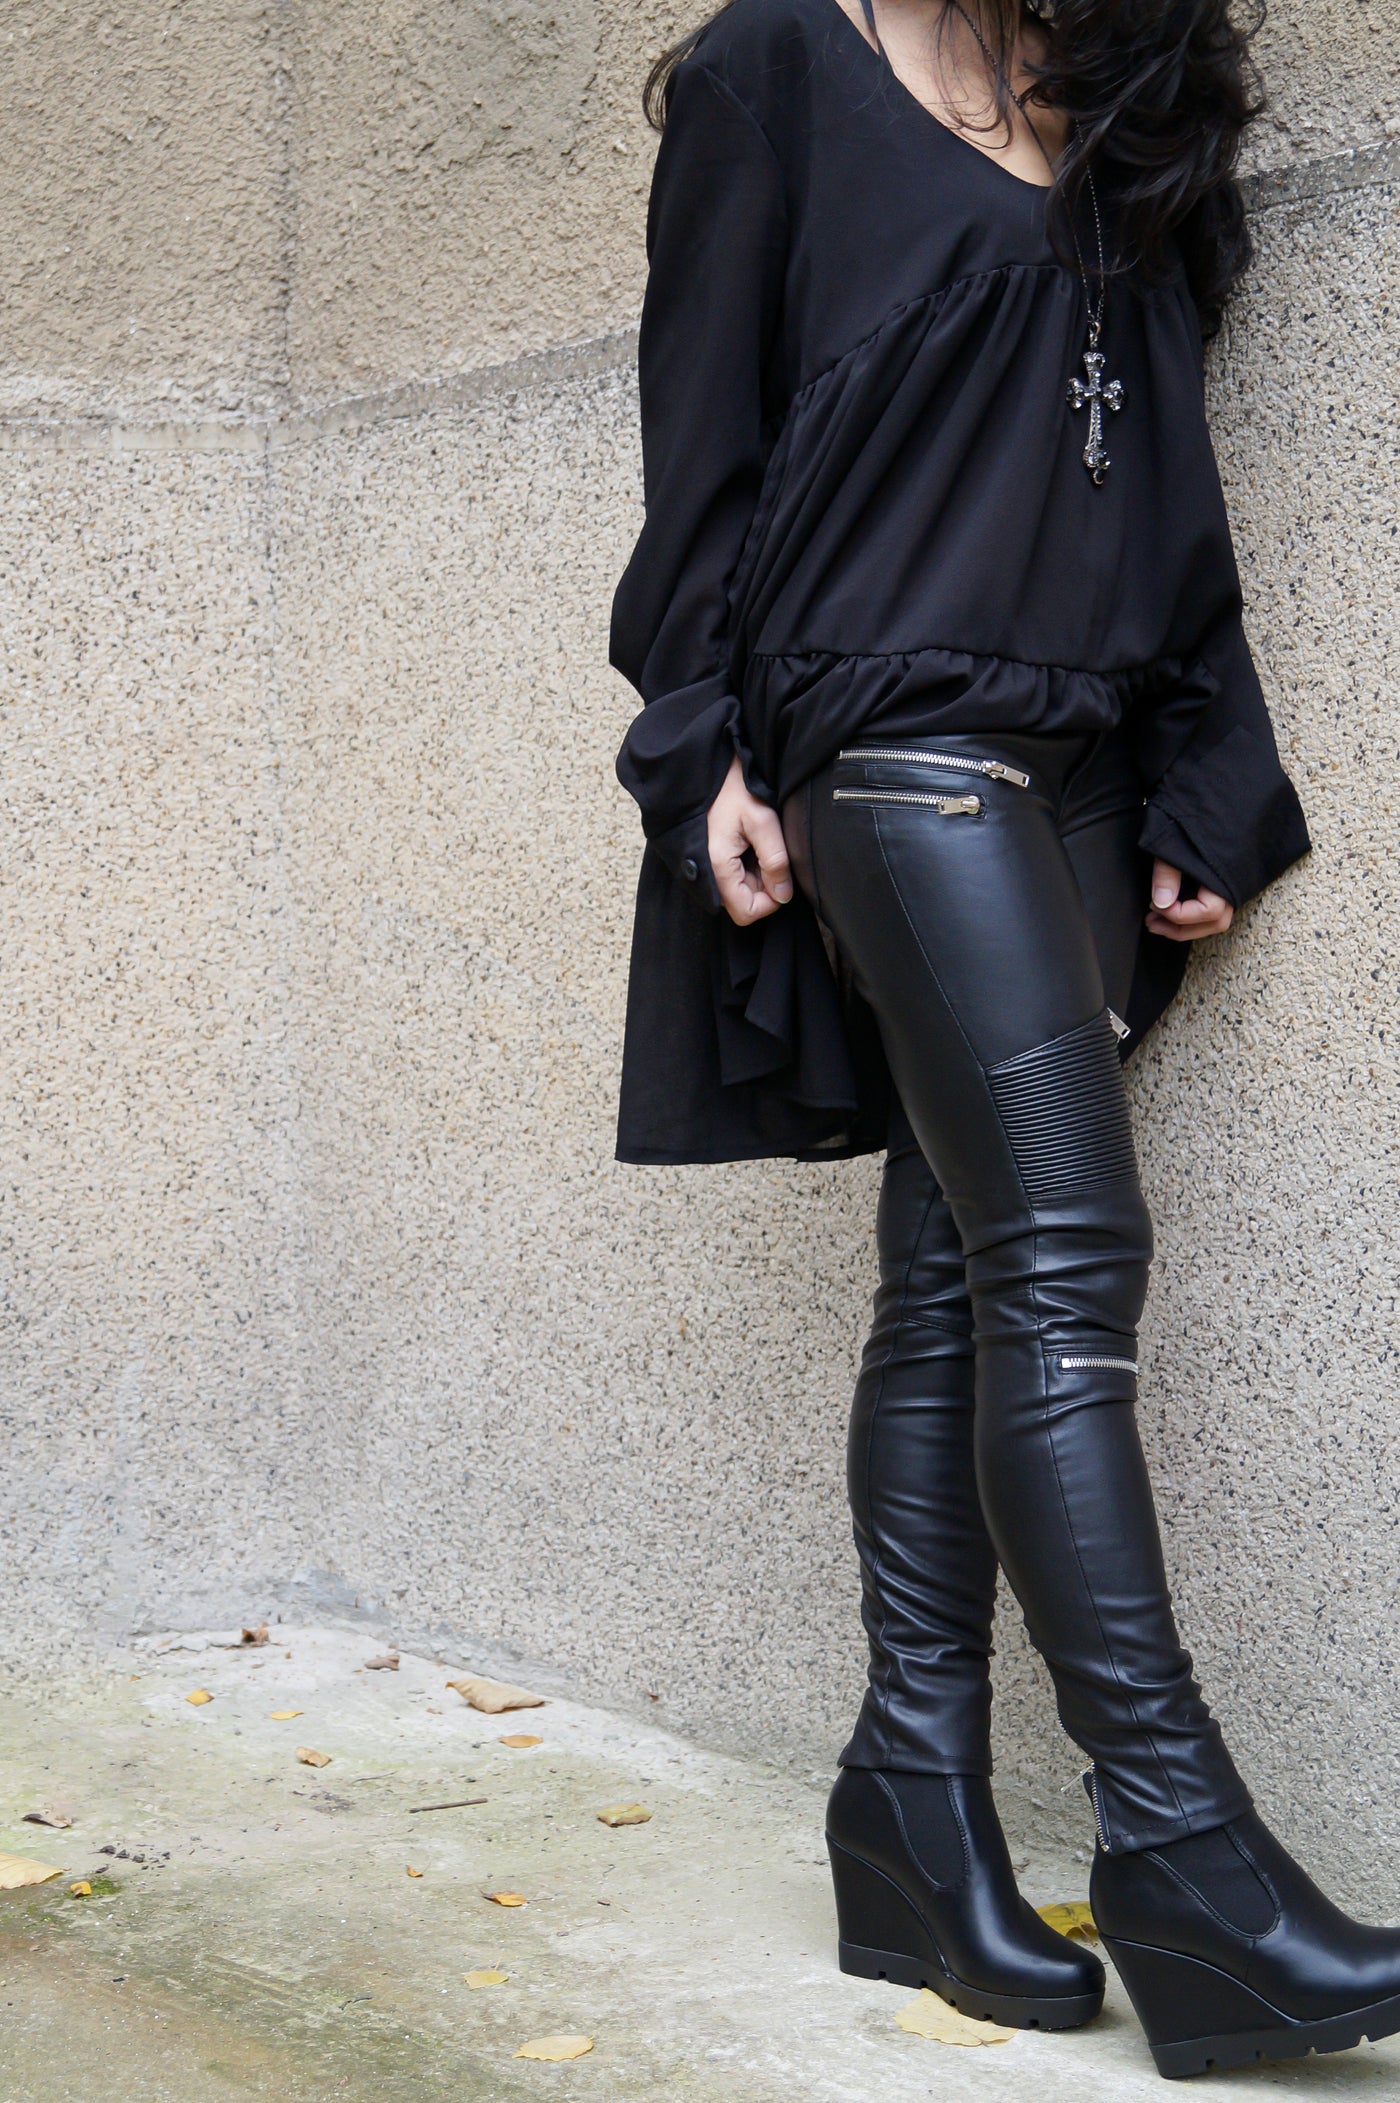 Black vegan leather leggings with zipper F1510